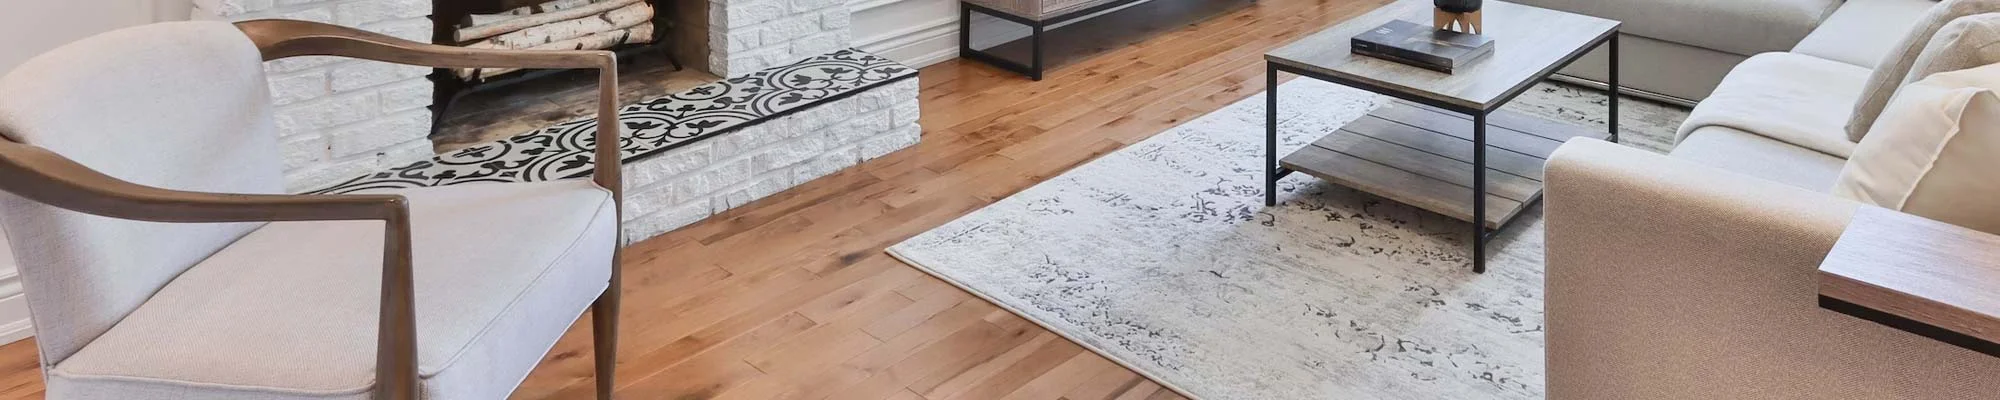 View Elkton Carpet & Tile’s Flooring Product Catalog